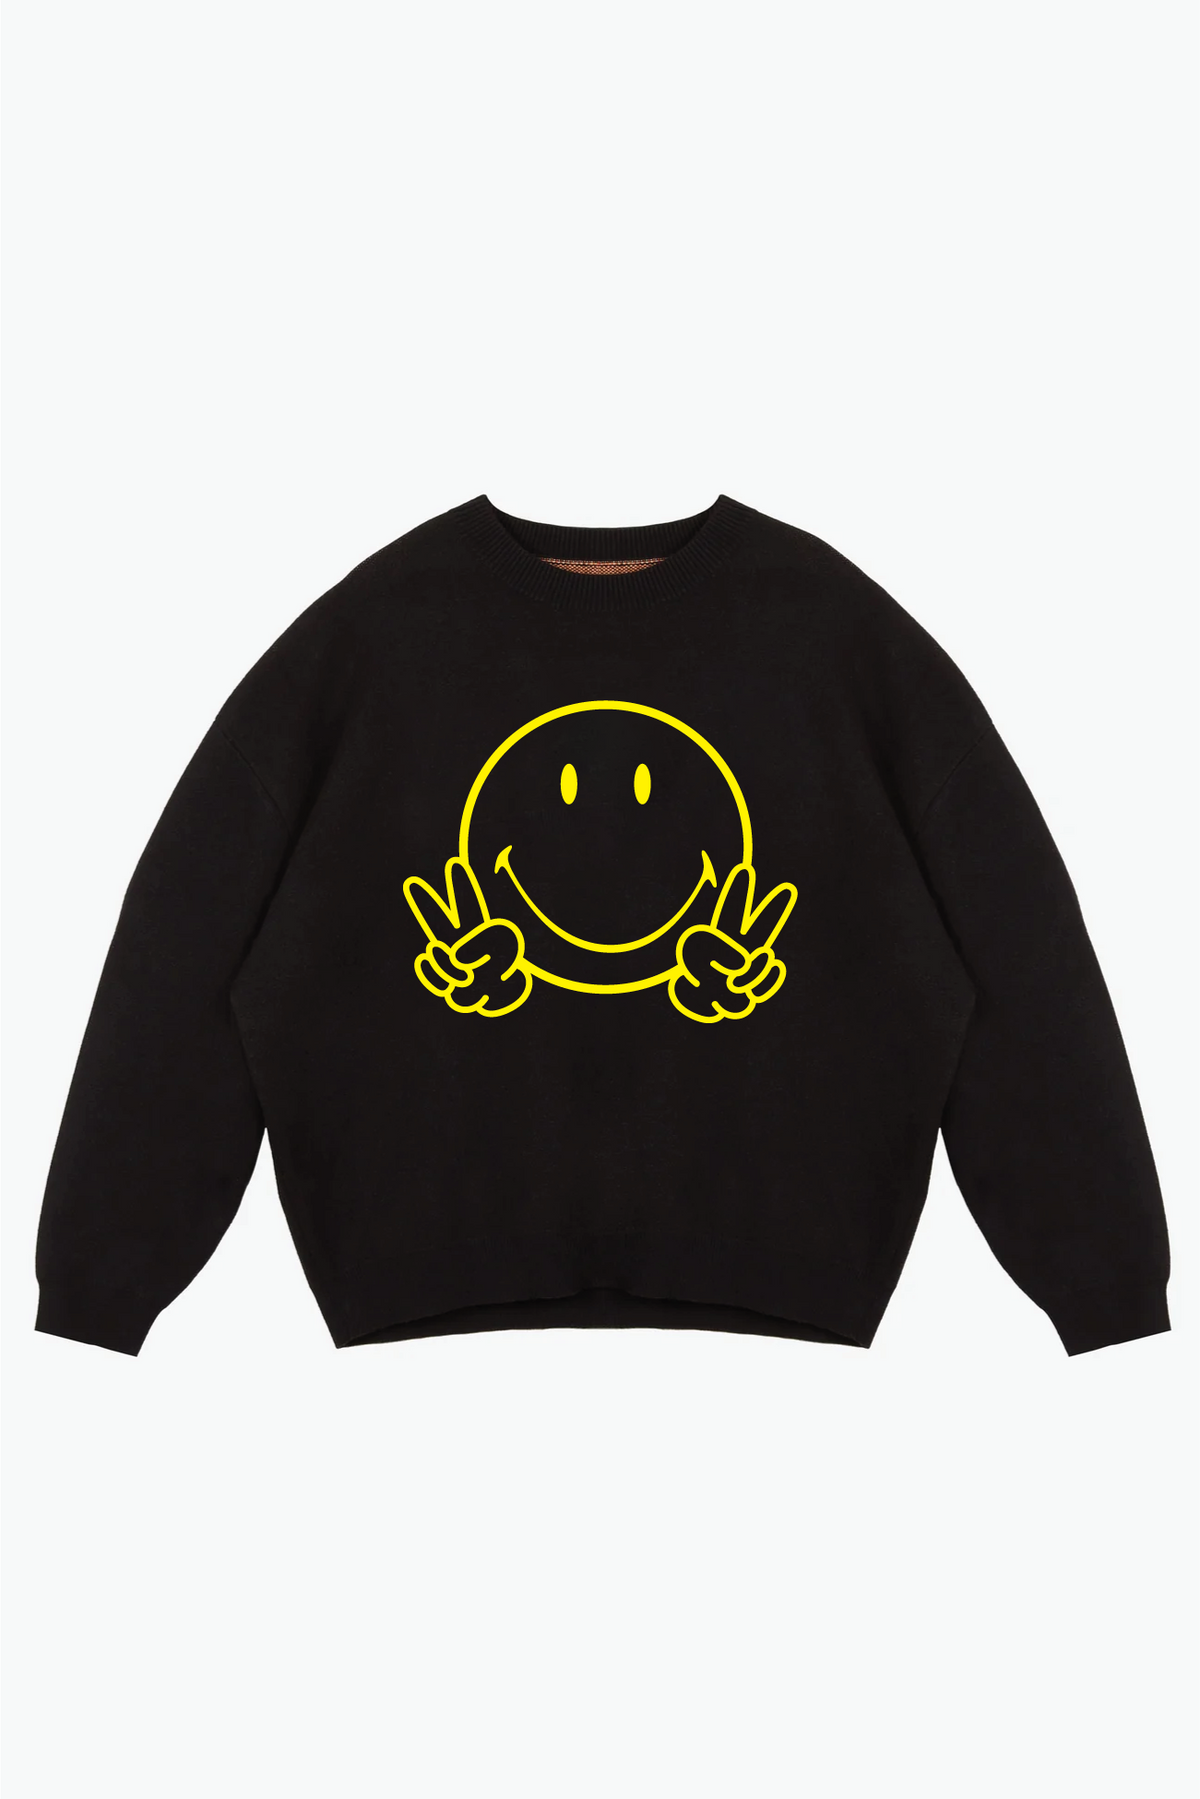 P/C x Smiley Knit Sweater - Black